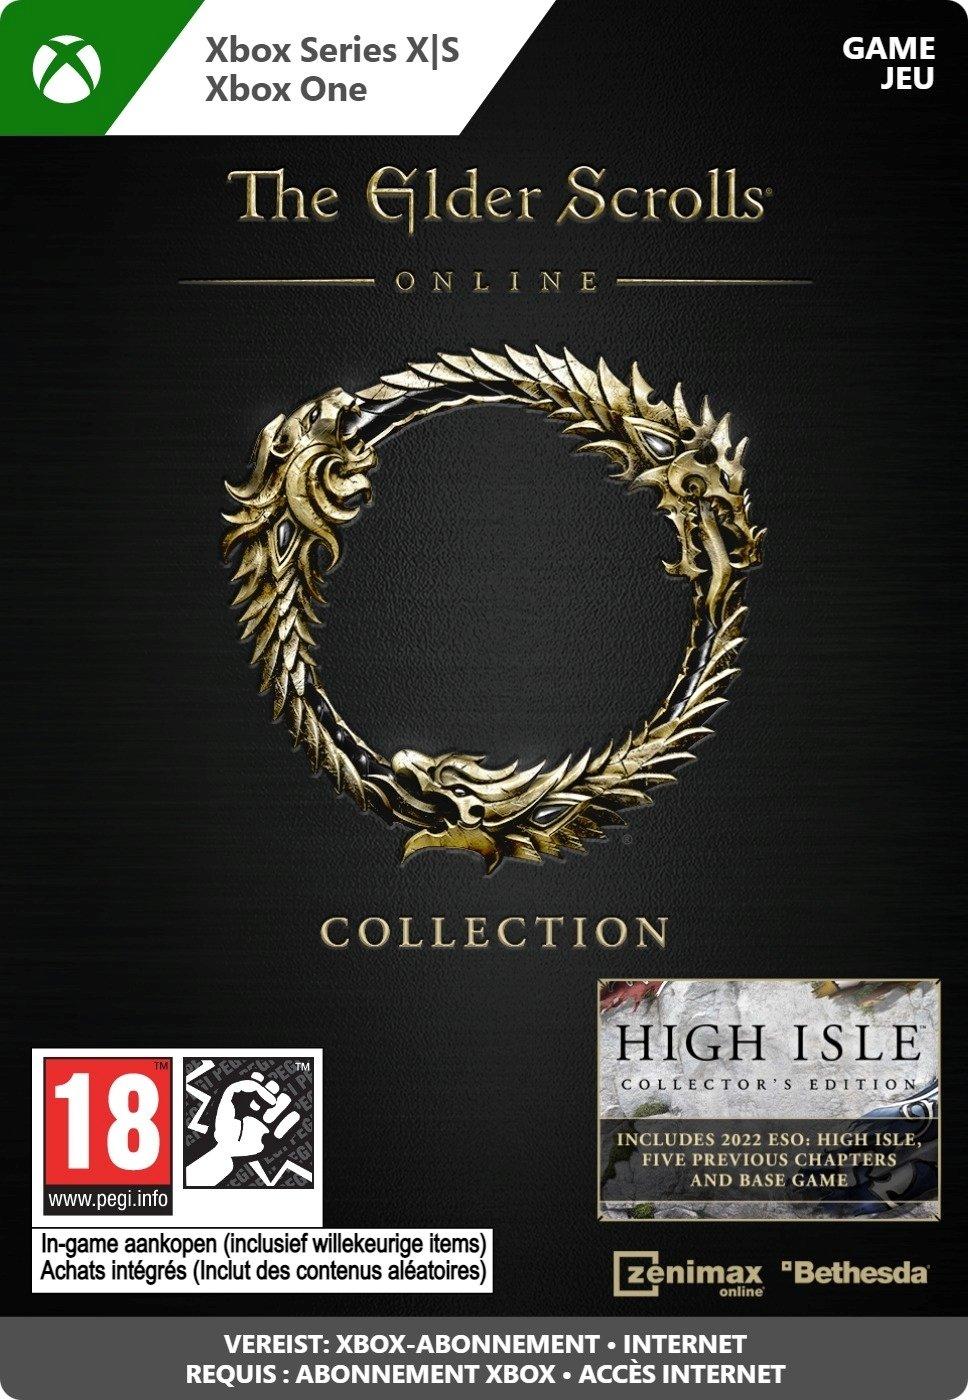 The Elder Scrolls Online Collection: High Isle Collector's Edition - Xbox Series X/Xbox One - Ga | G7Q-00152 (bcc0fcfe-b089-f24d-8dfe-26415fa367f4)